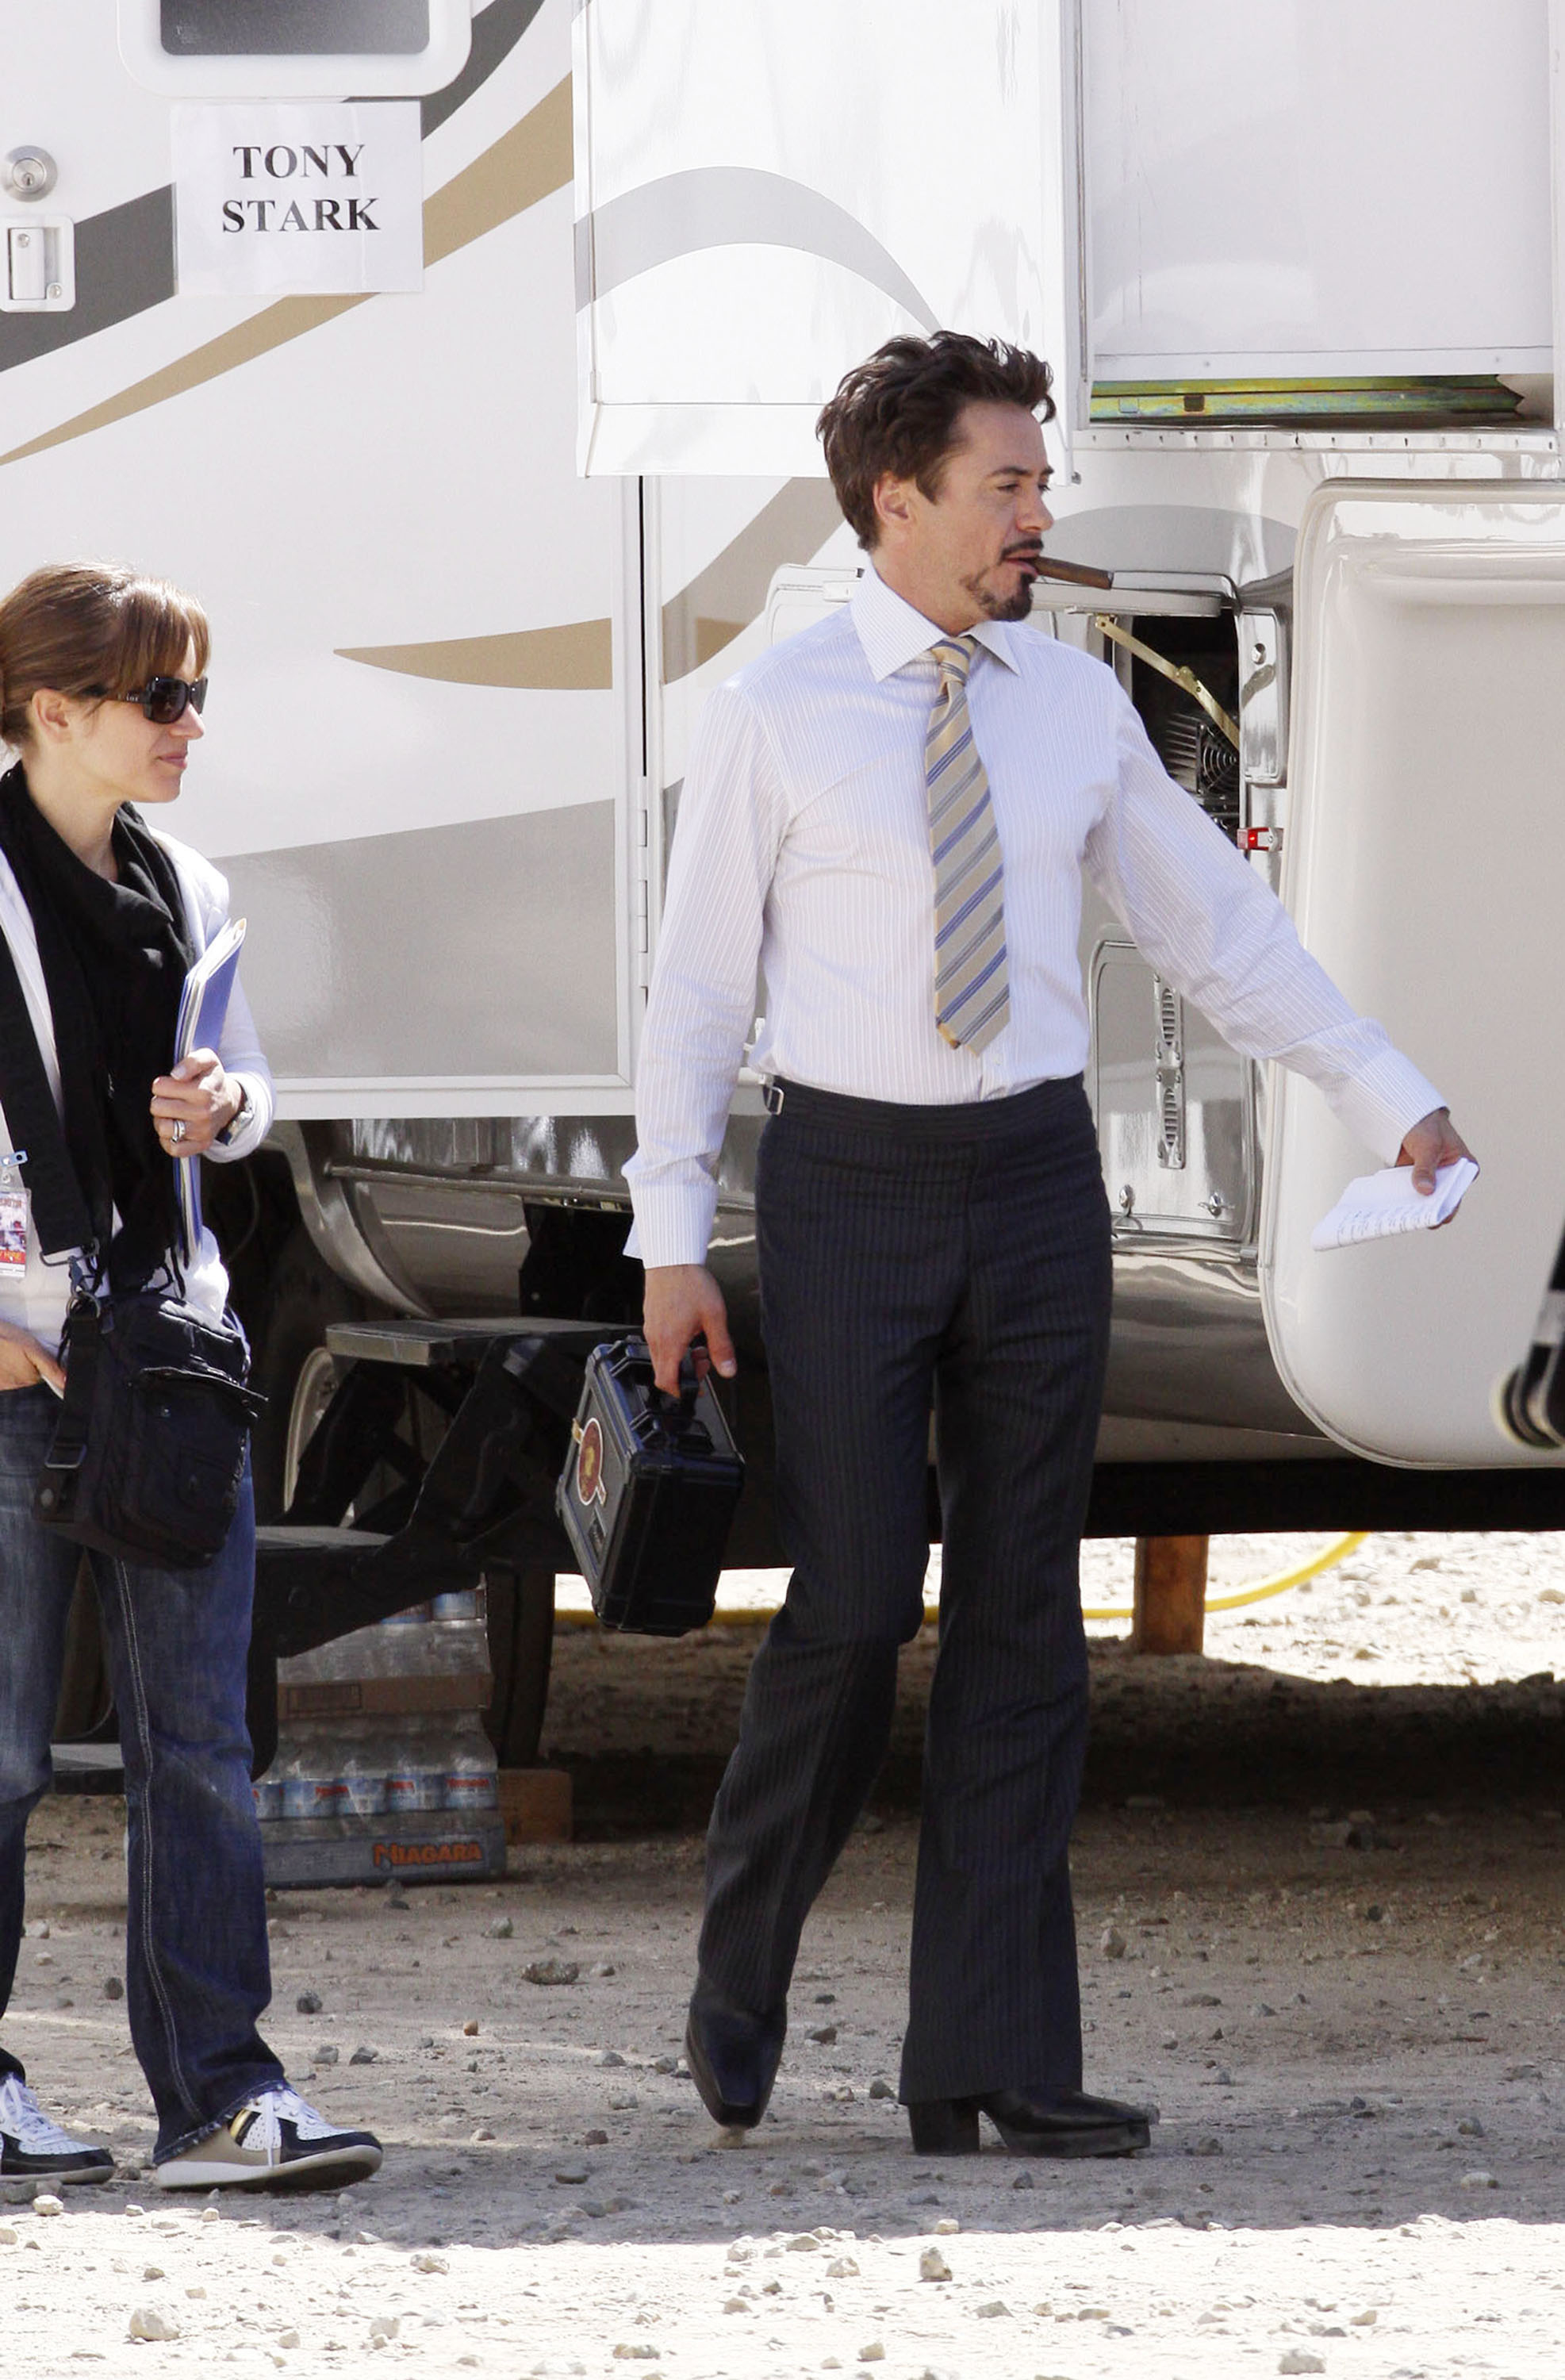 Fans first noticed Robert wearing high heels on the set of Iron Man